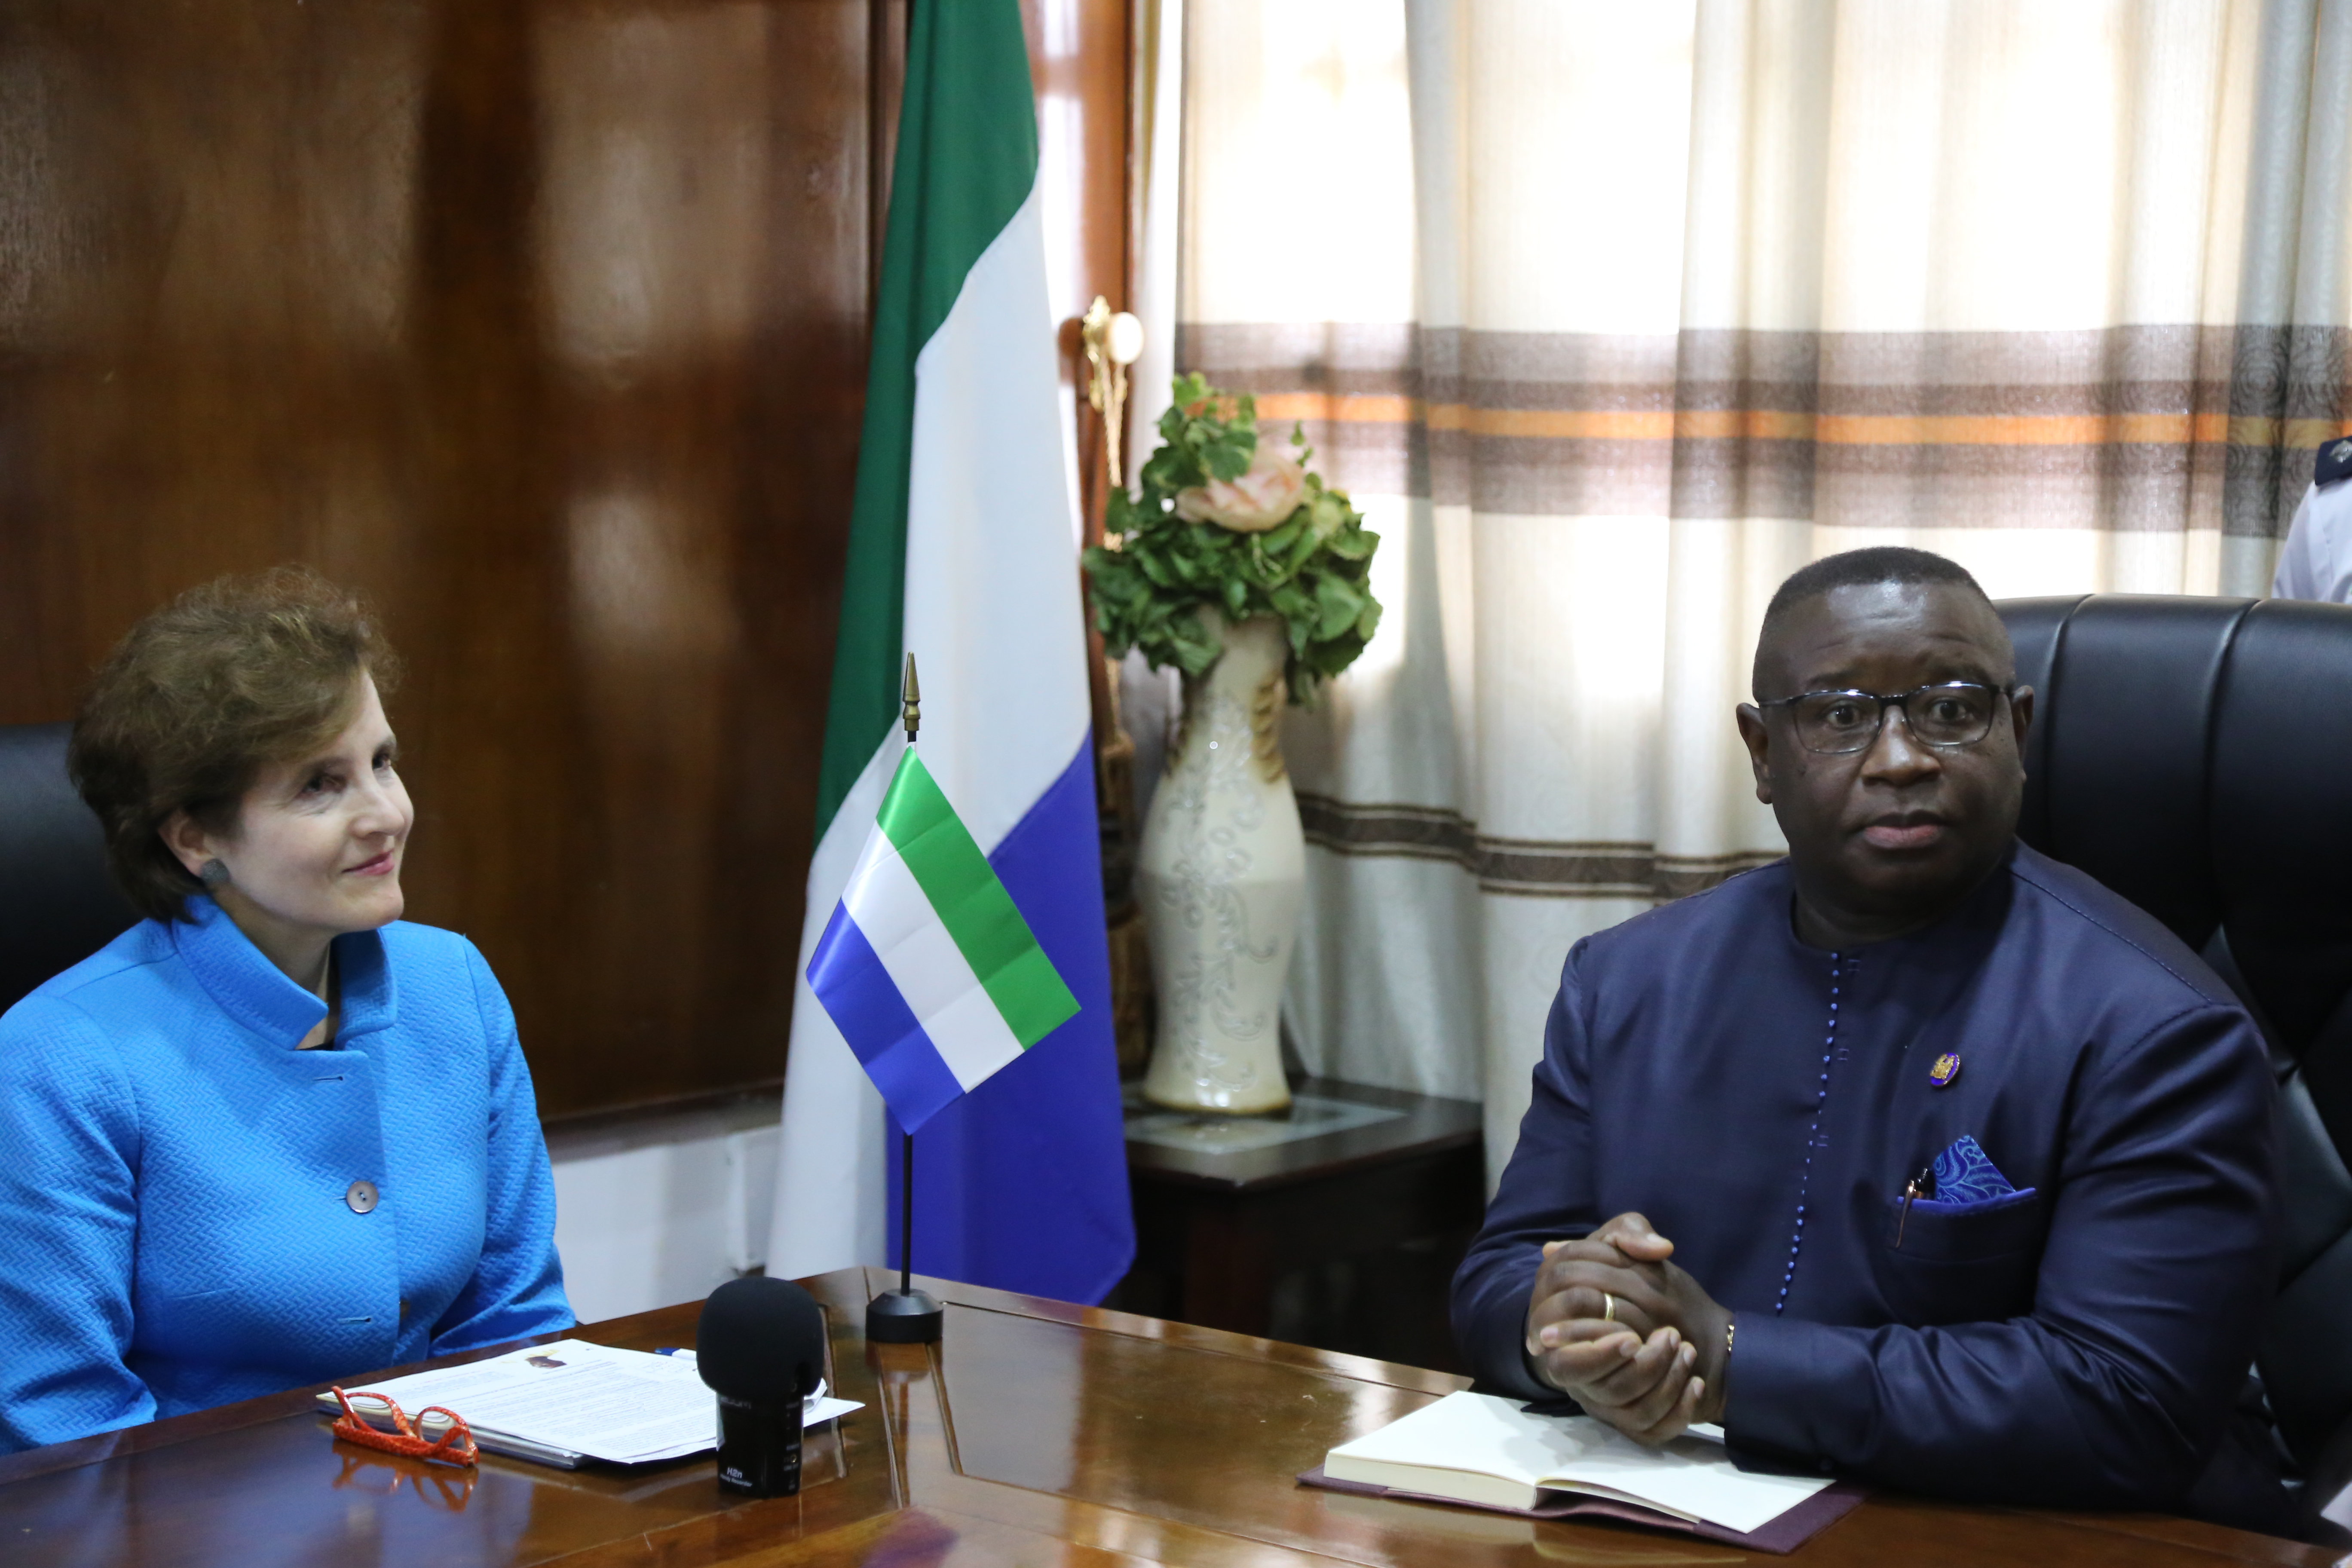 President of Sierra Leone, Julius Maada Bio (right) (photo credit: Global Partnership for Education/flickr)